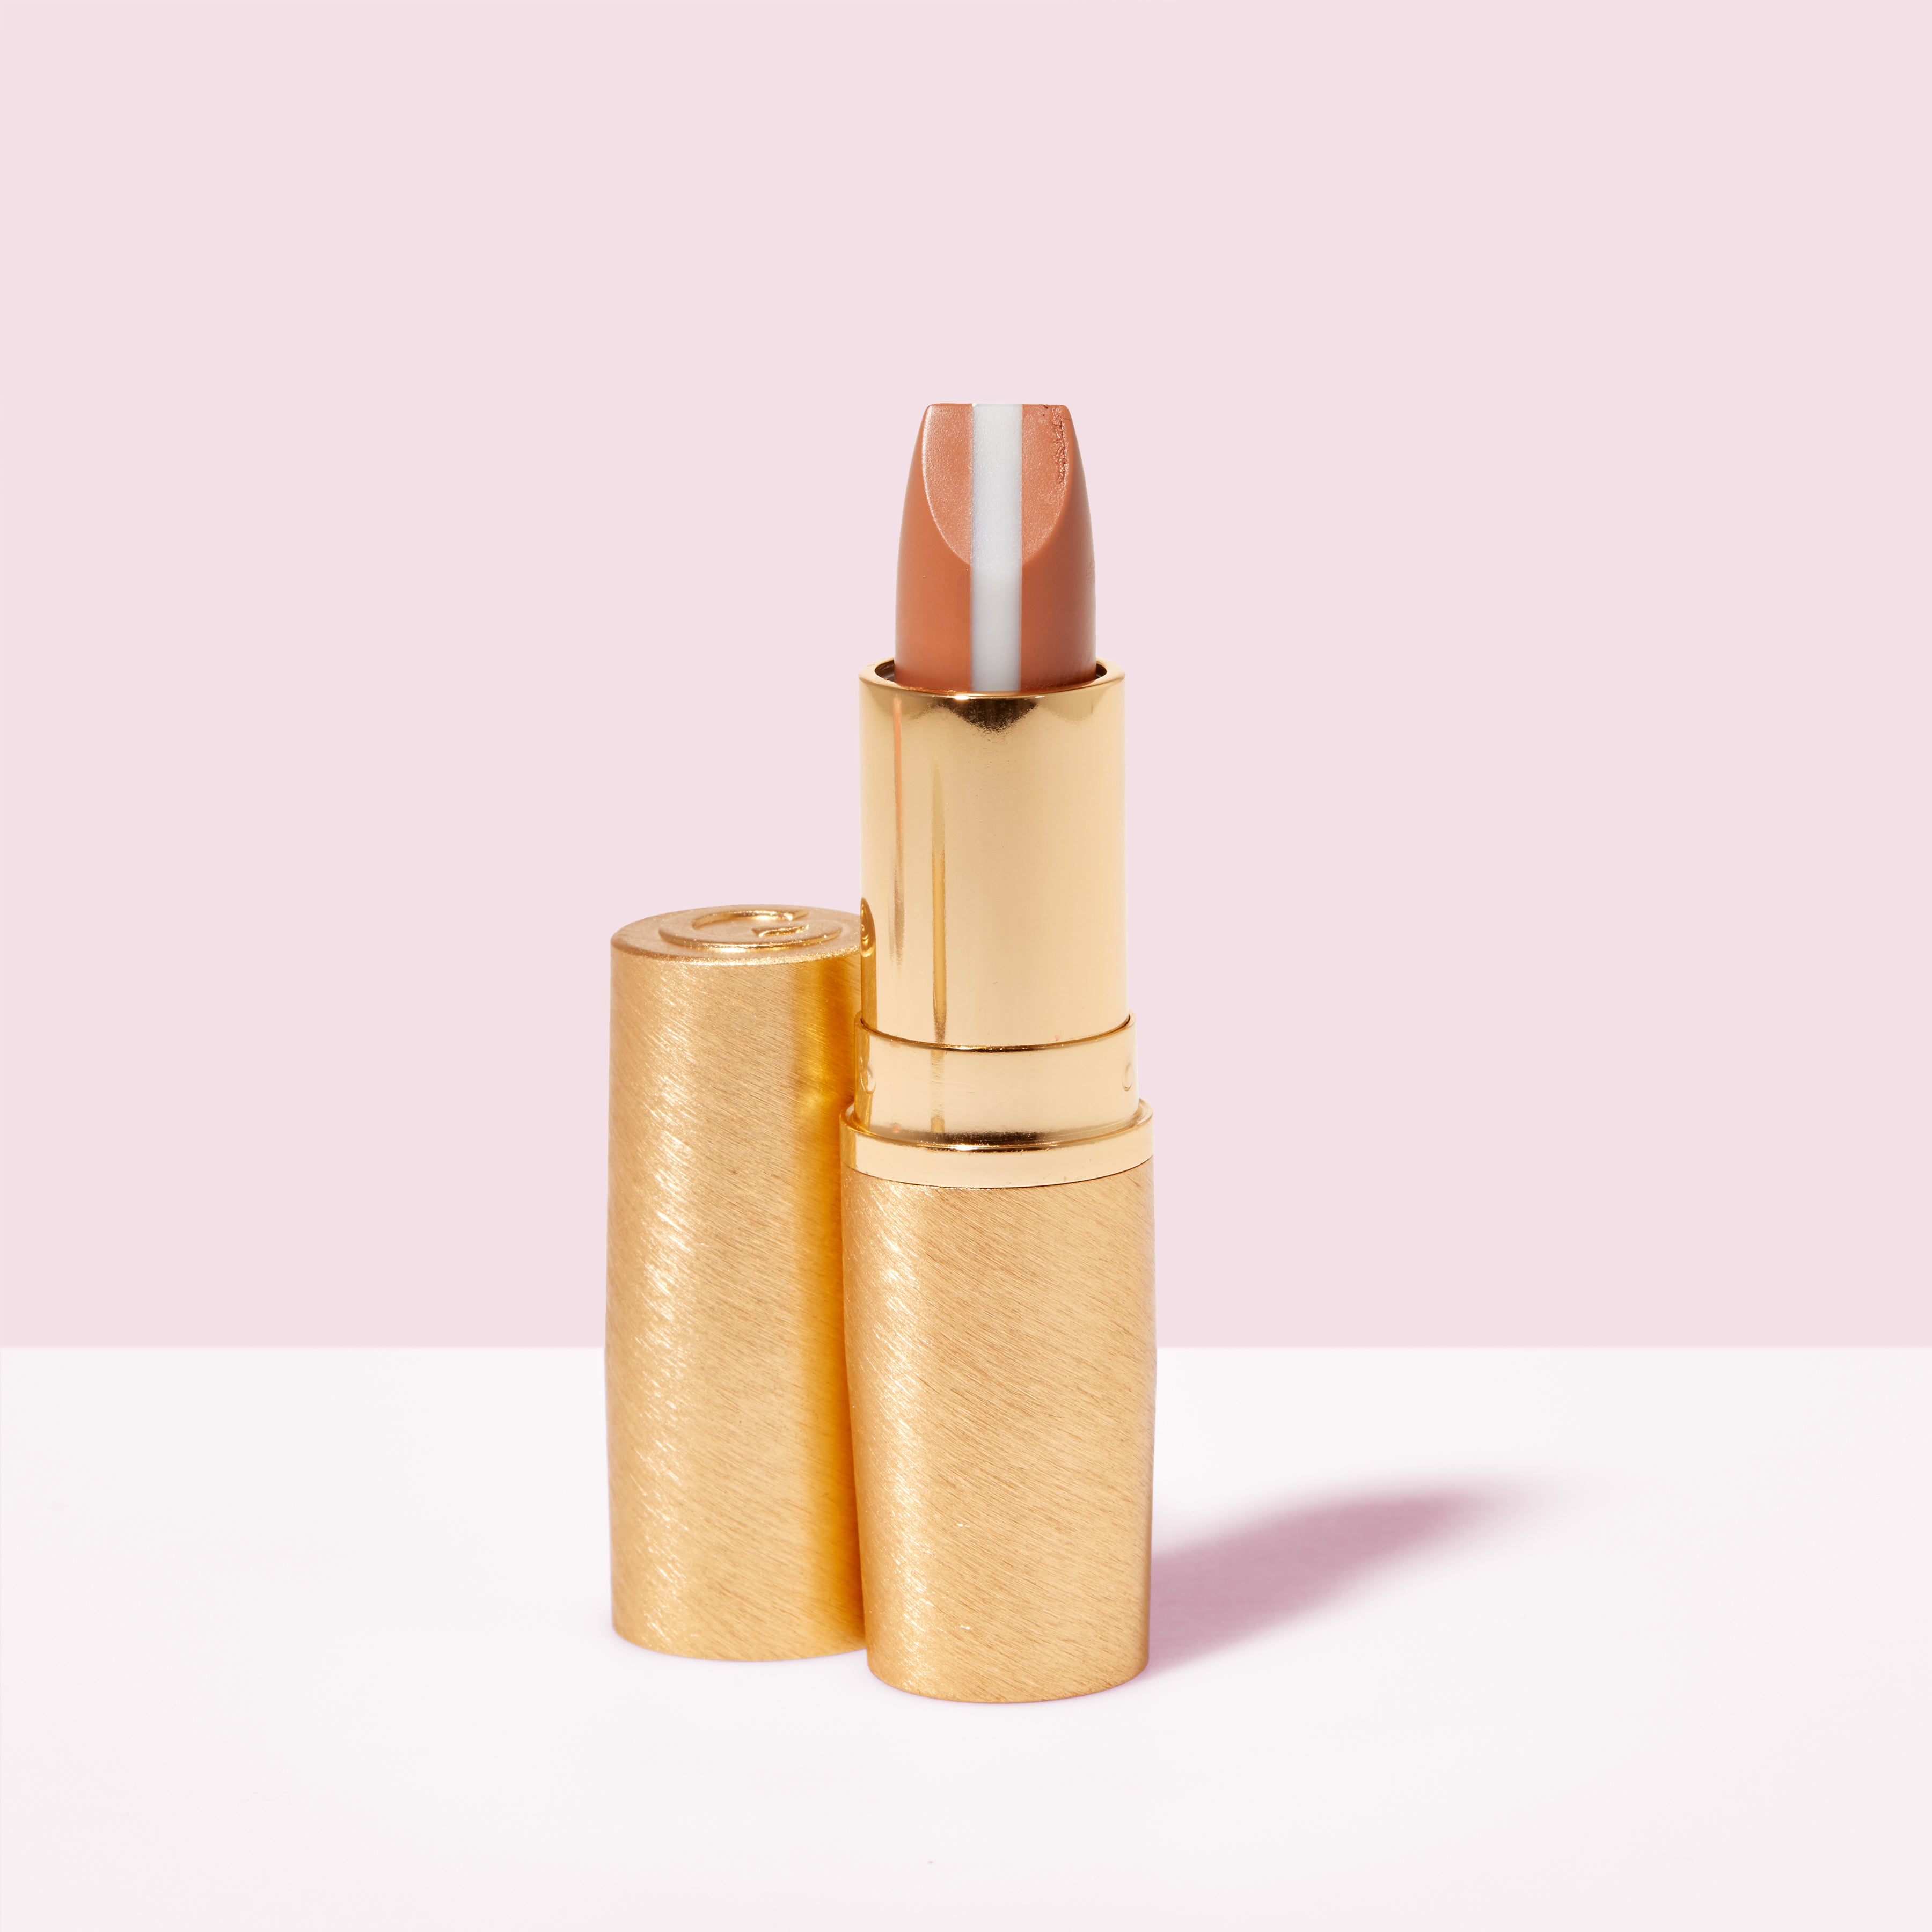 GrandeLIPSTICK Plumping Lipstick | Satin